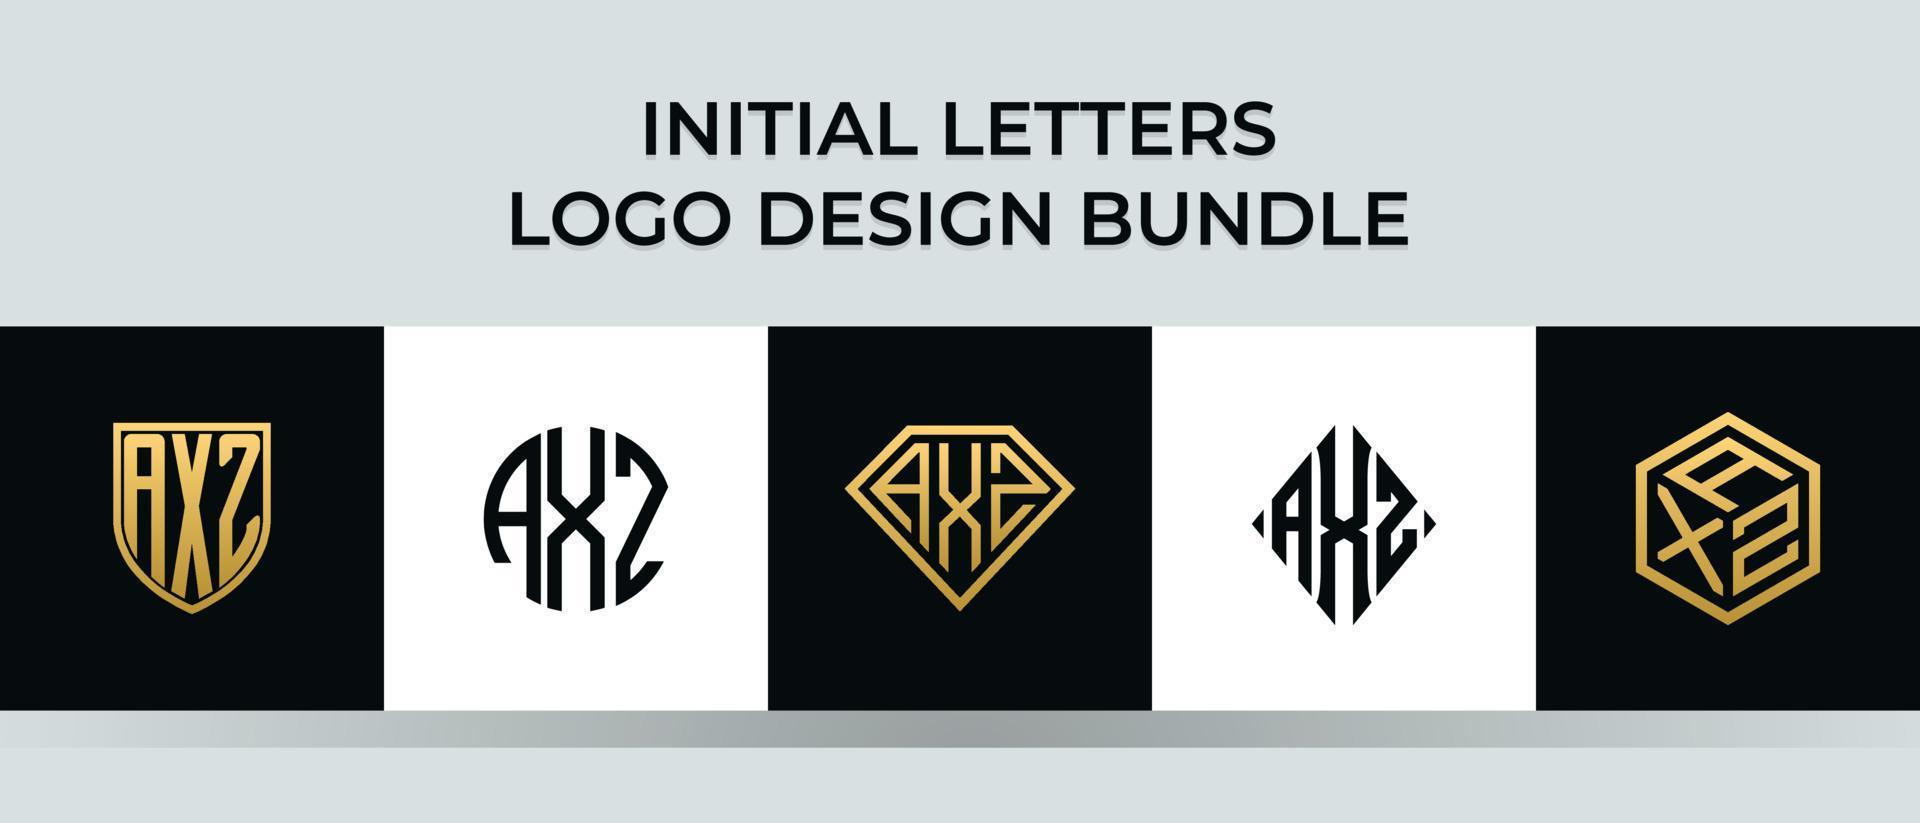 Initial letters AXZ logo designs Bundle vector